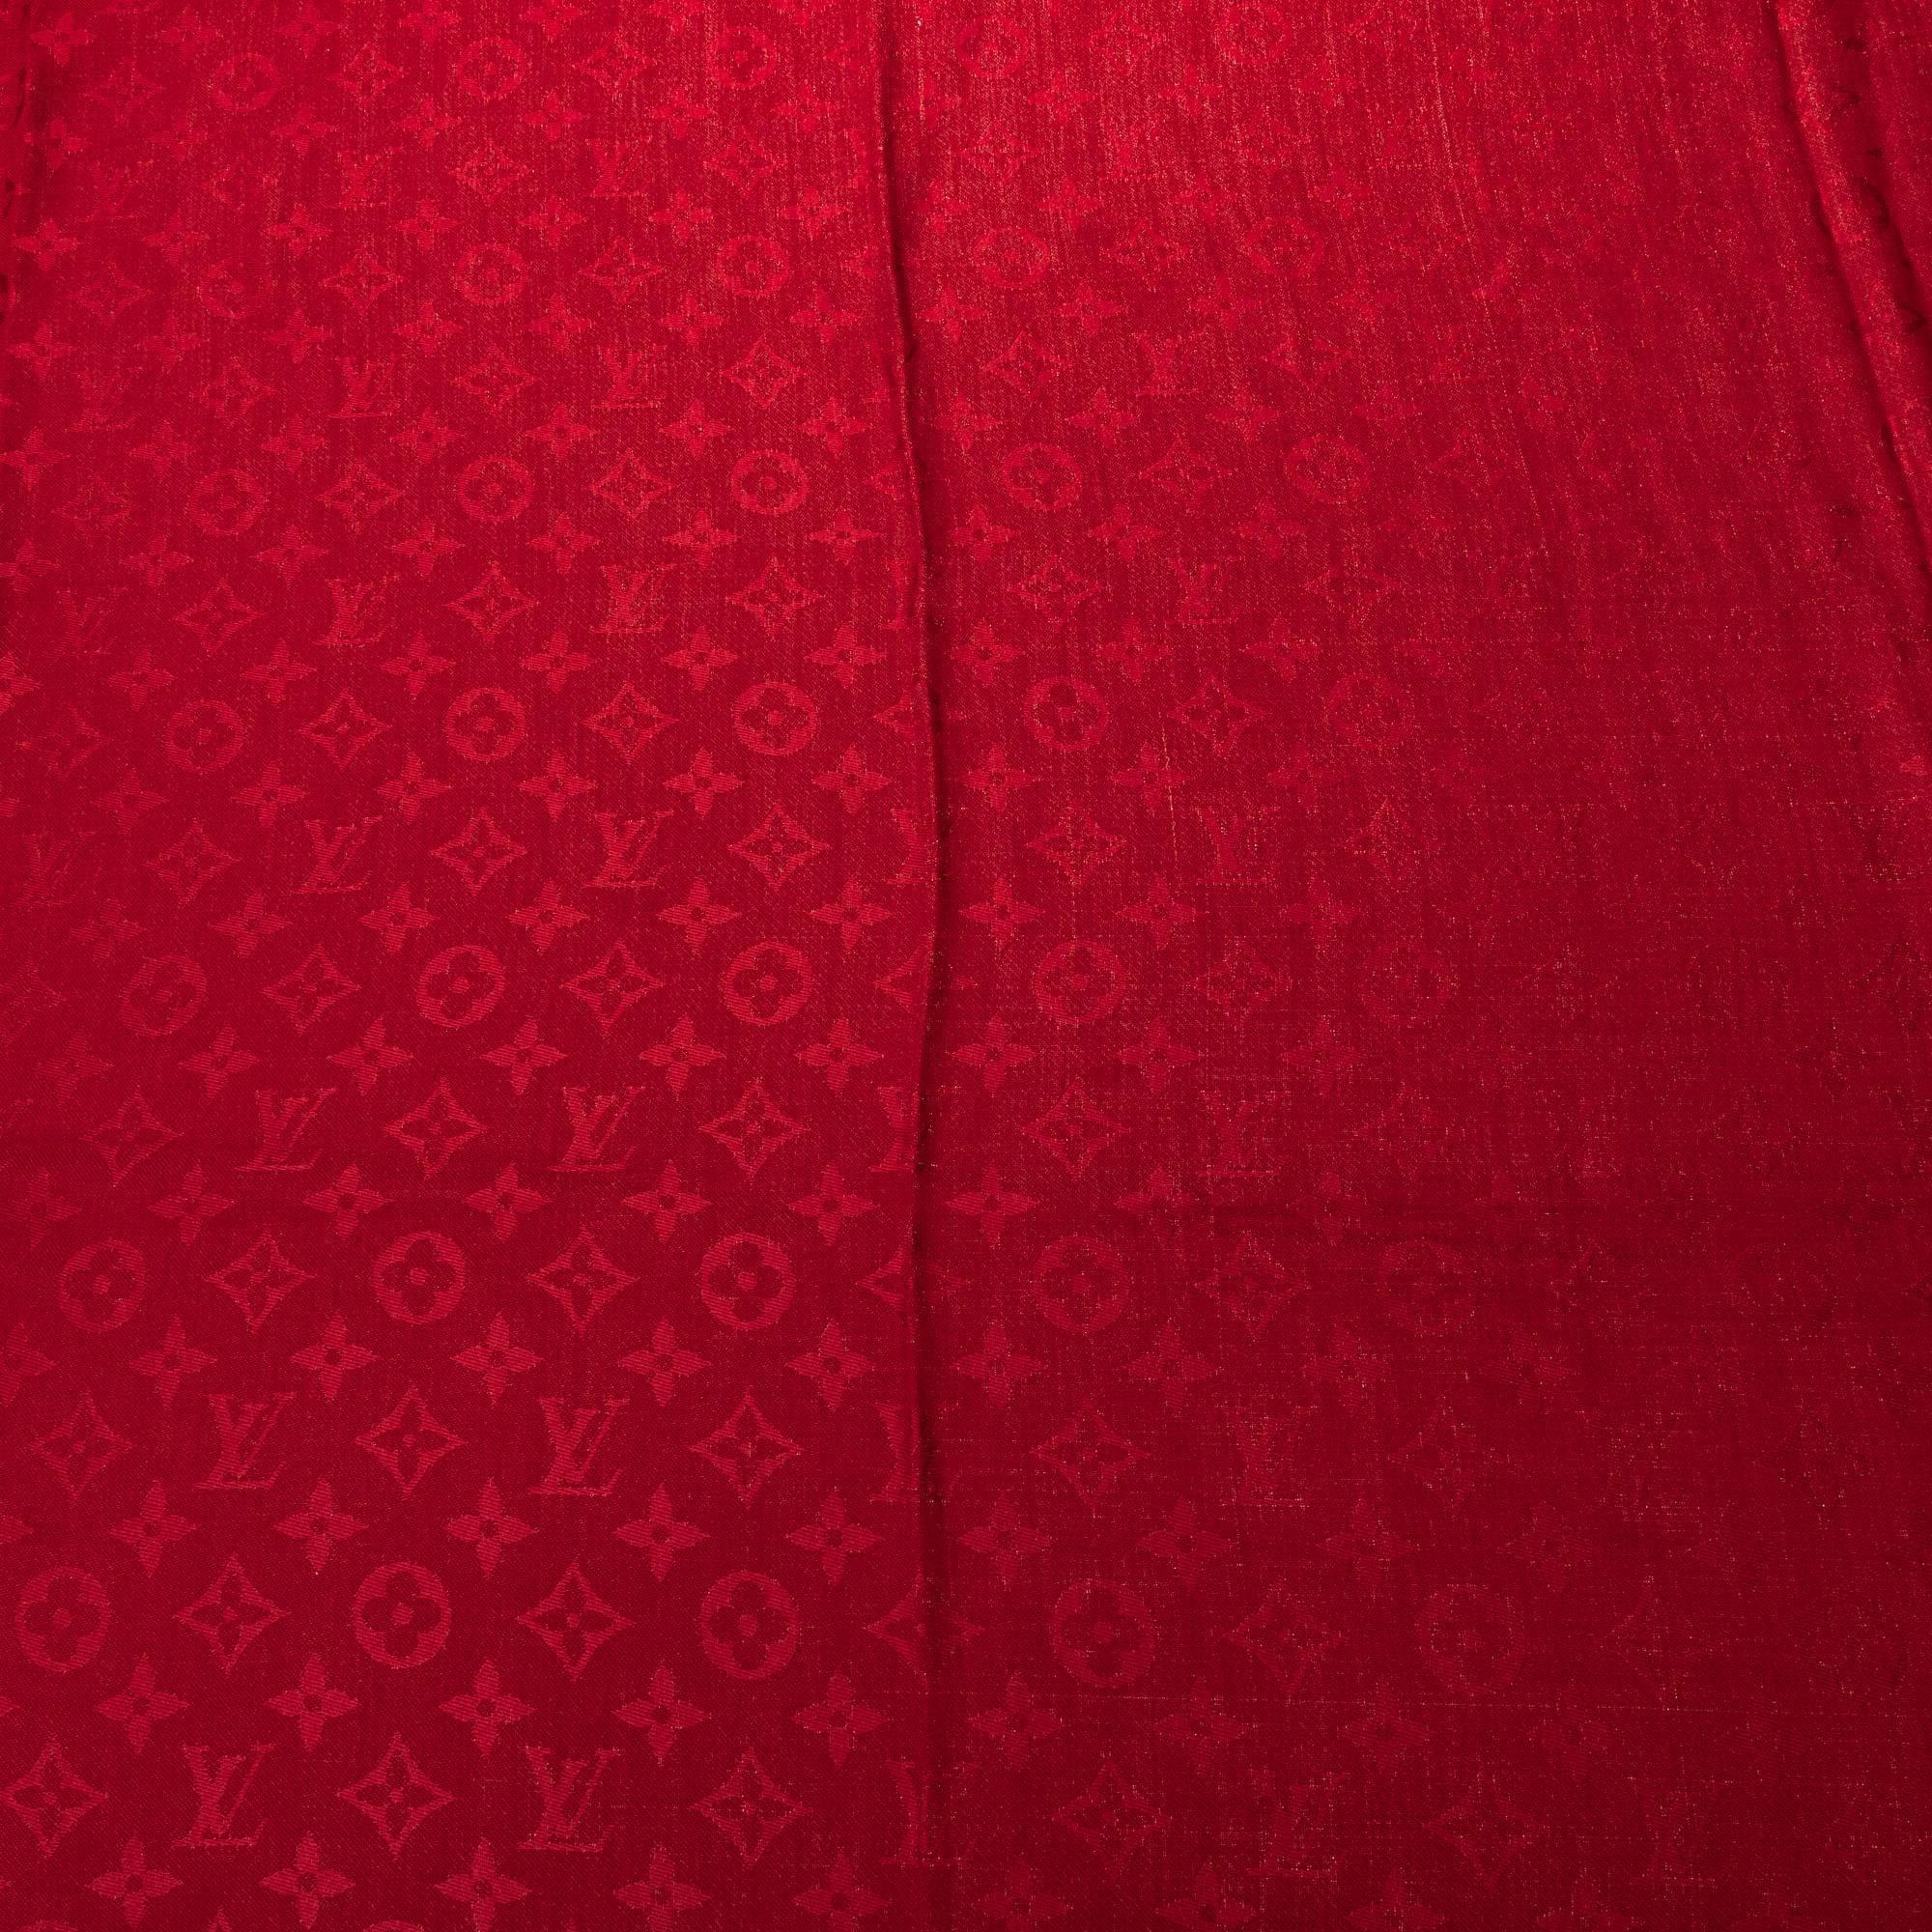 Xale Louis Vuitton Monogram Seda e Lã Vermelho